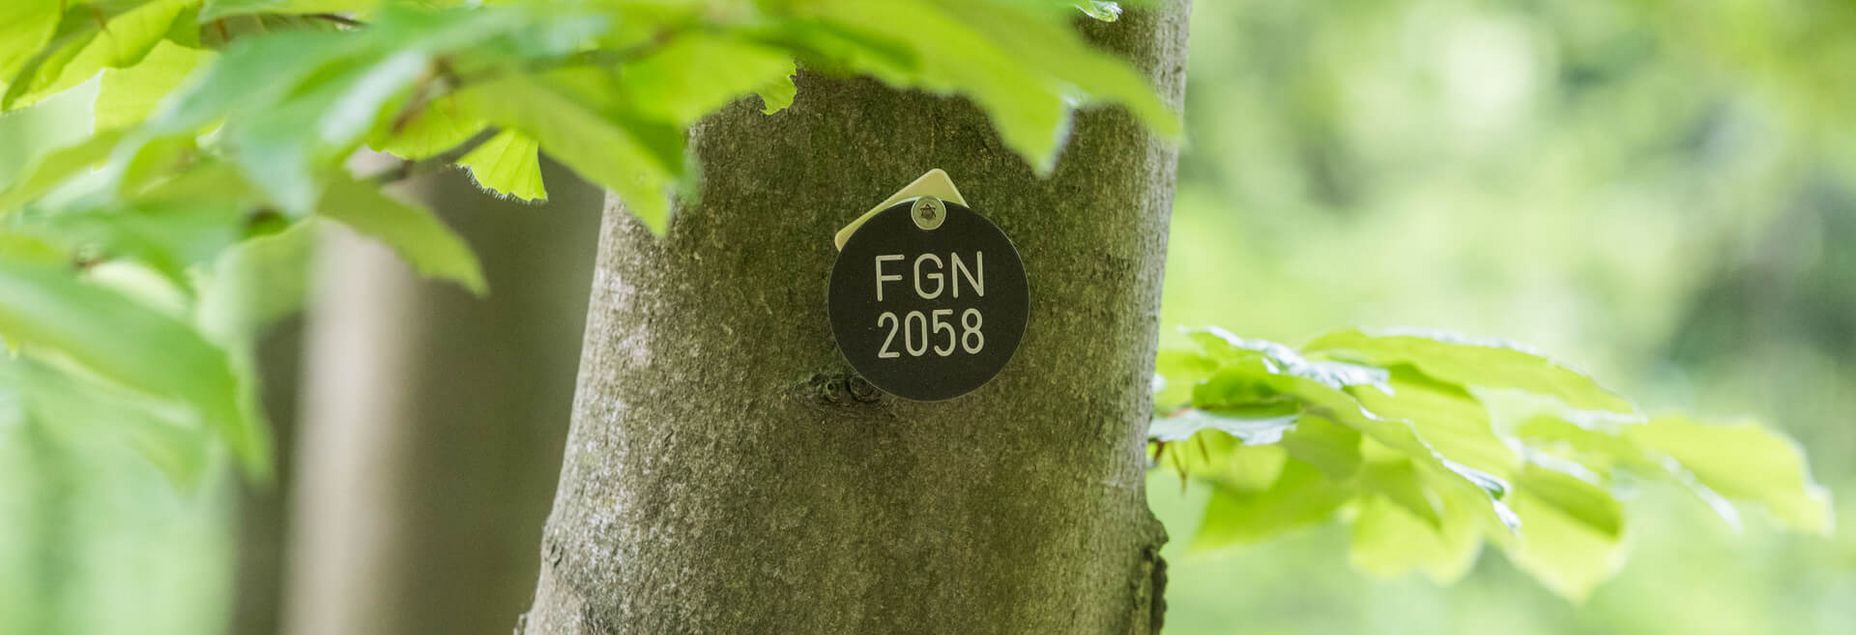 Baum FGN 2058 - Plakette